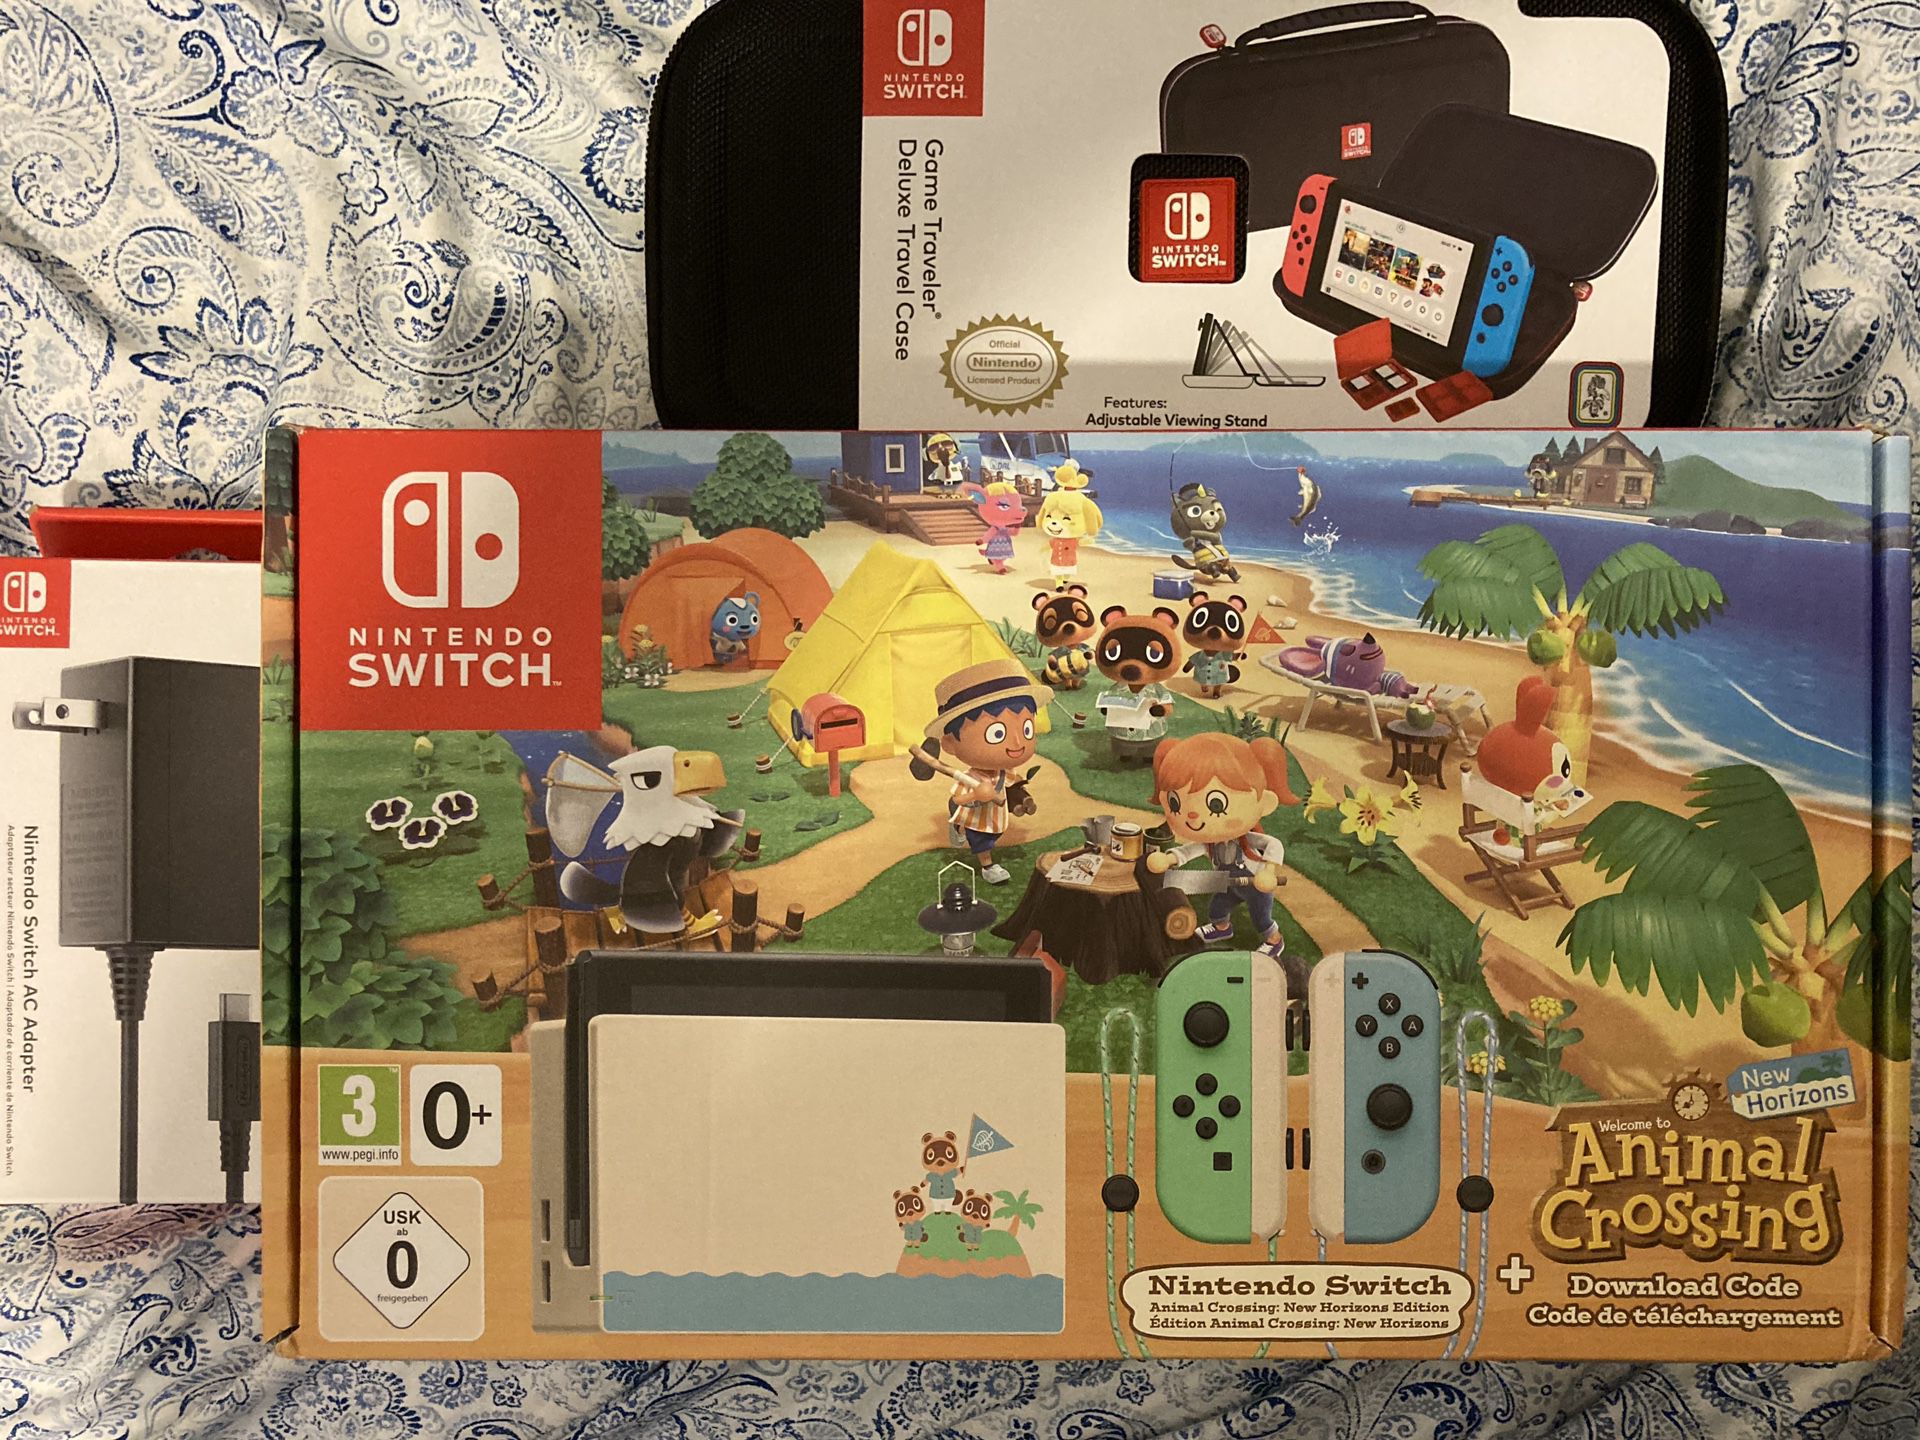 Nintendo Switch Animal Crossing Limited Edition Bundle